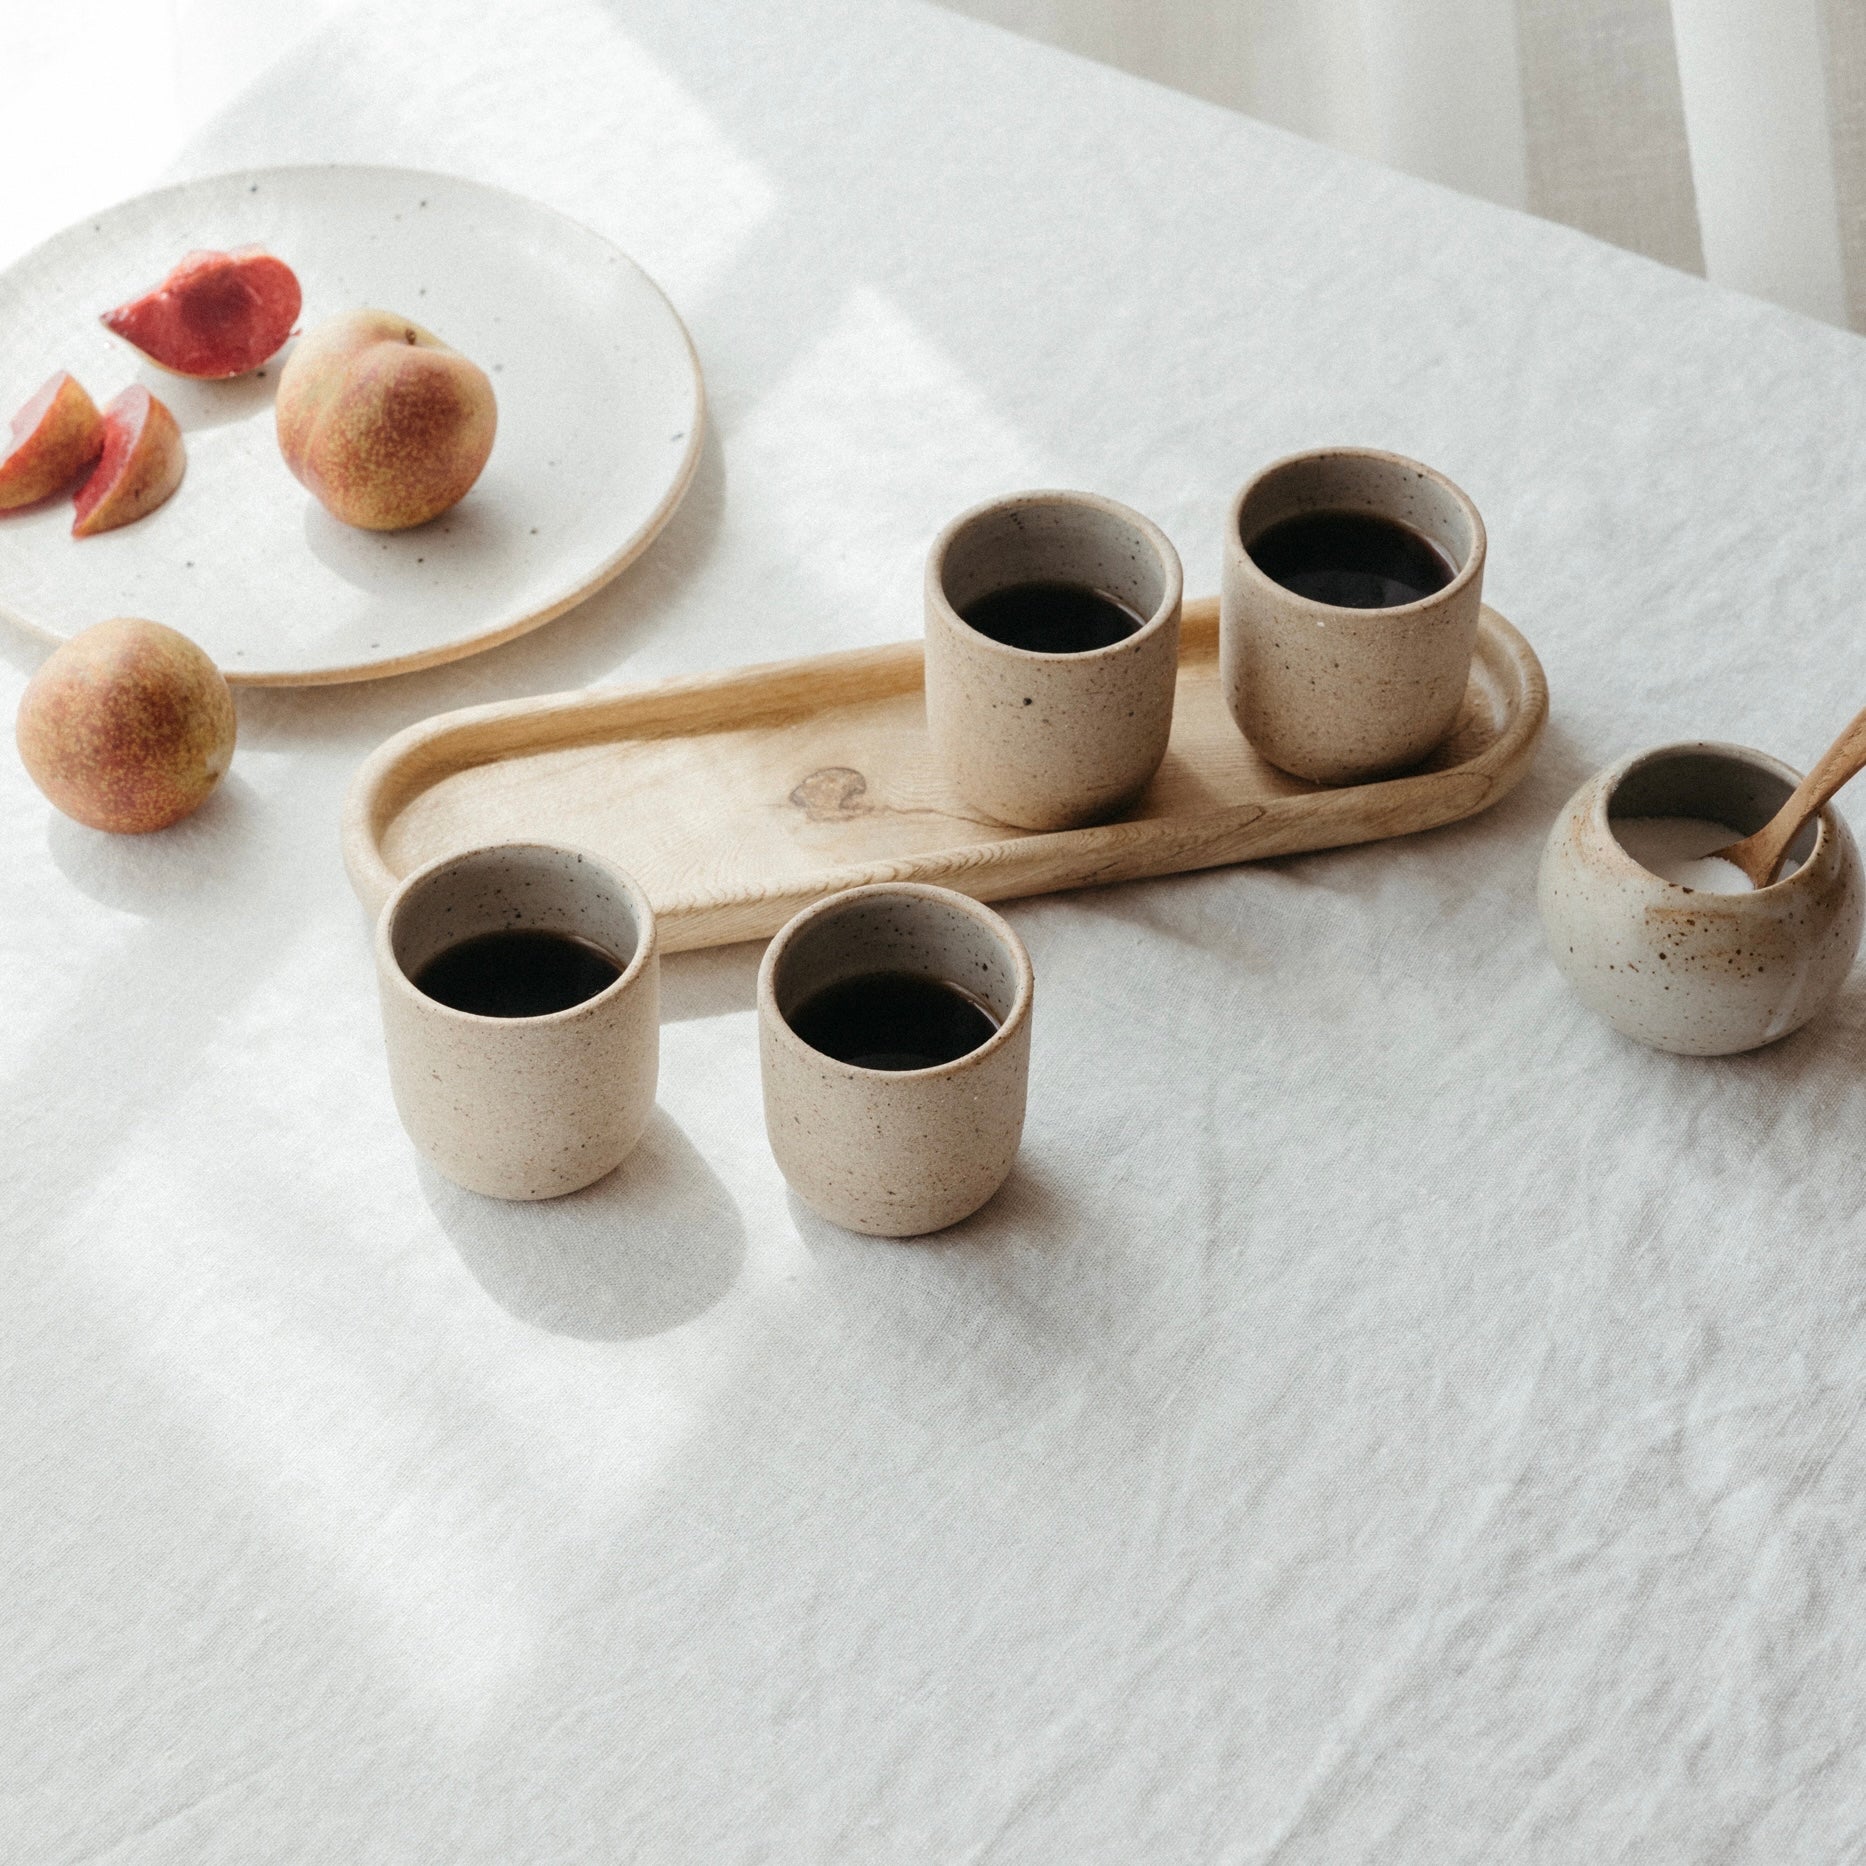 Tolatr Ceramic Kiln-Change Espresso Cups Small Espresso Coffee Cup Spirits  Cups Tasting Cups Ceramic Mate Cup Set of 4 (3Oz)